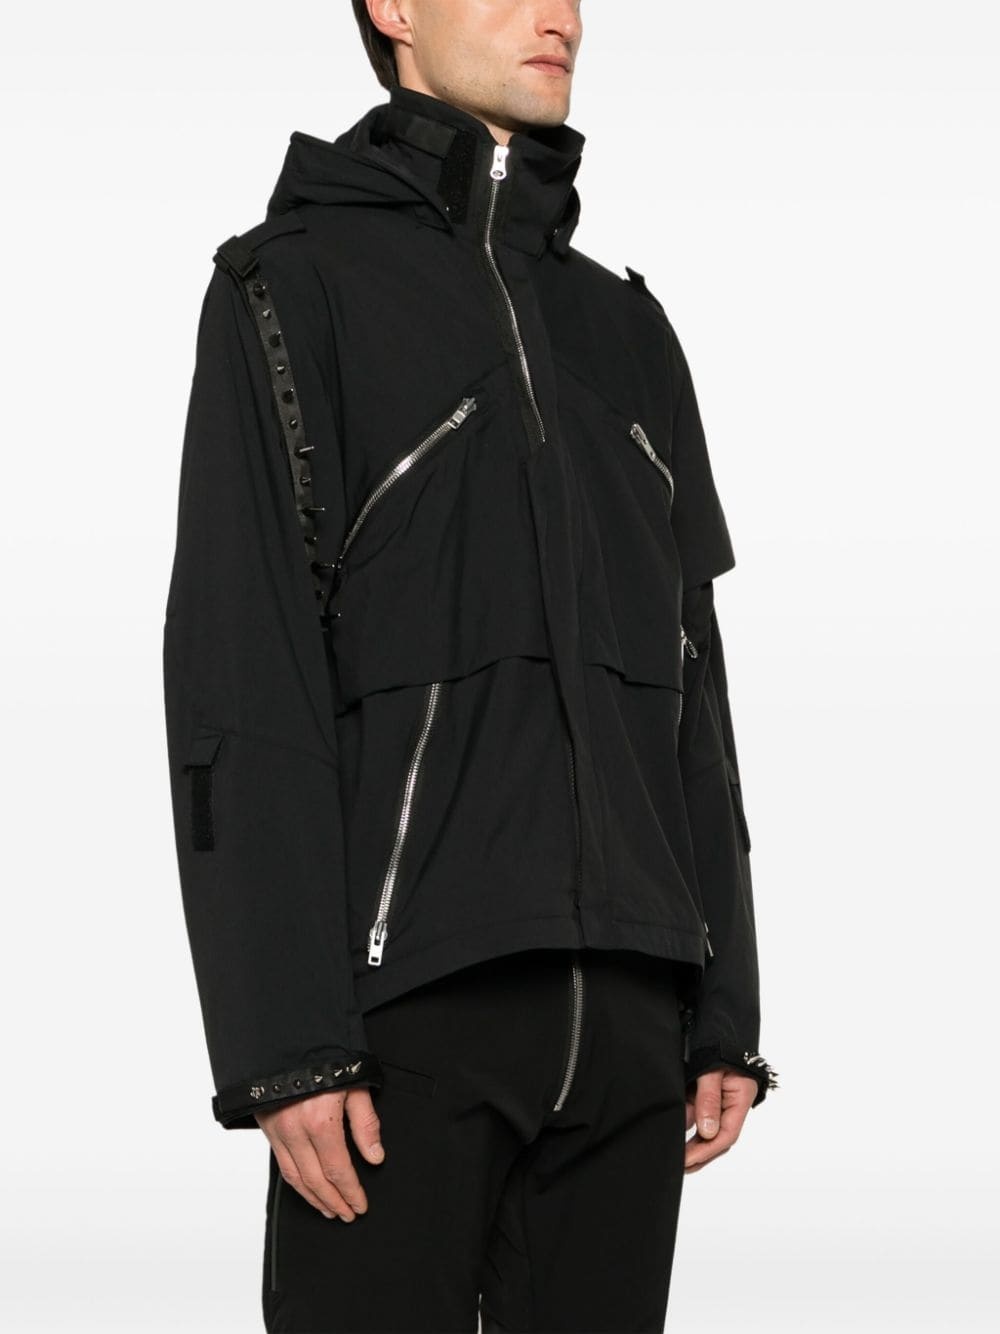 Encapsulated Interops hooded jacket - 3